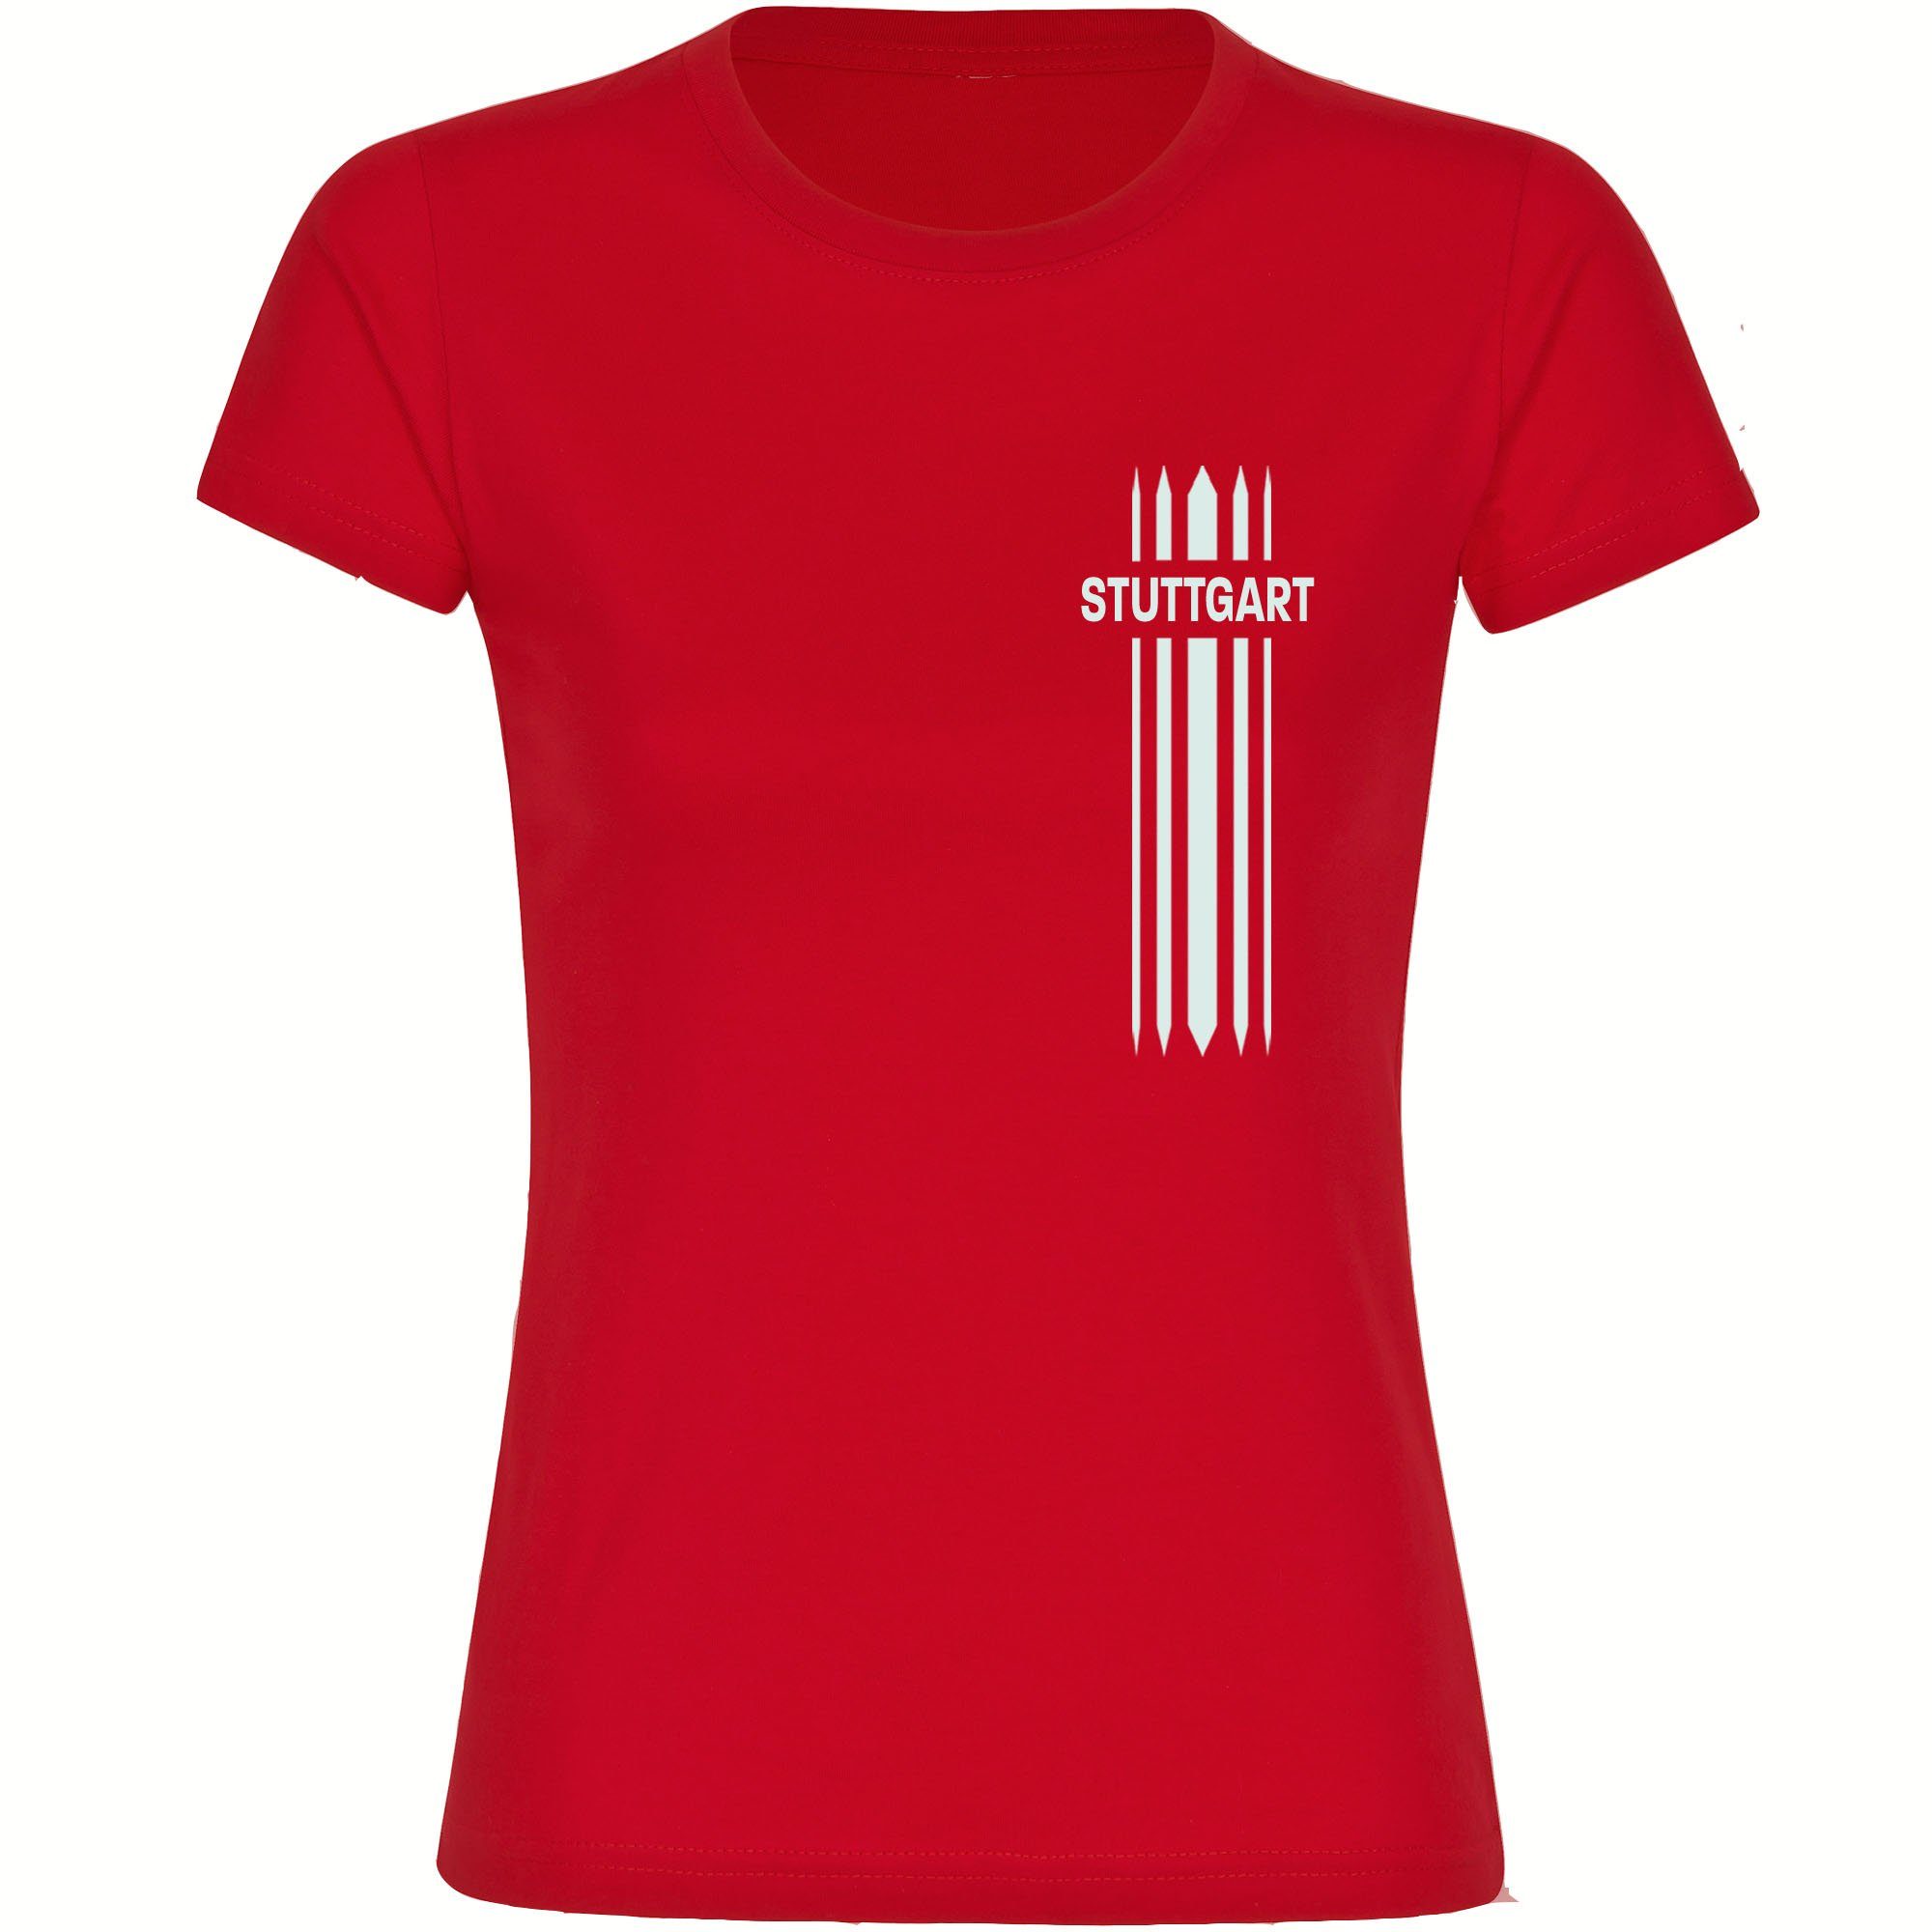 multifanshop T-Shirt Damen Stuttgart - Streifen - Frauen